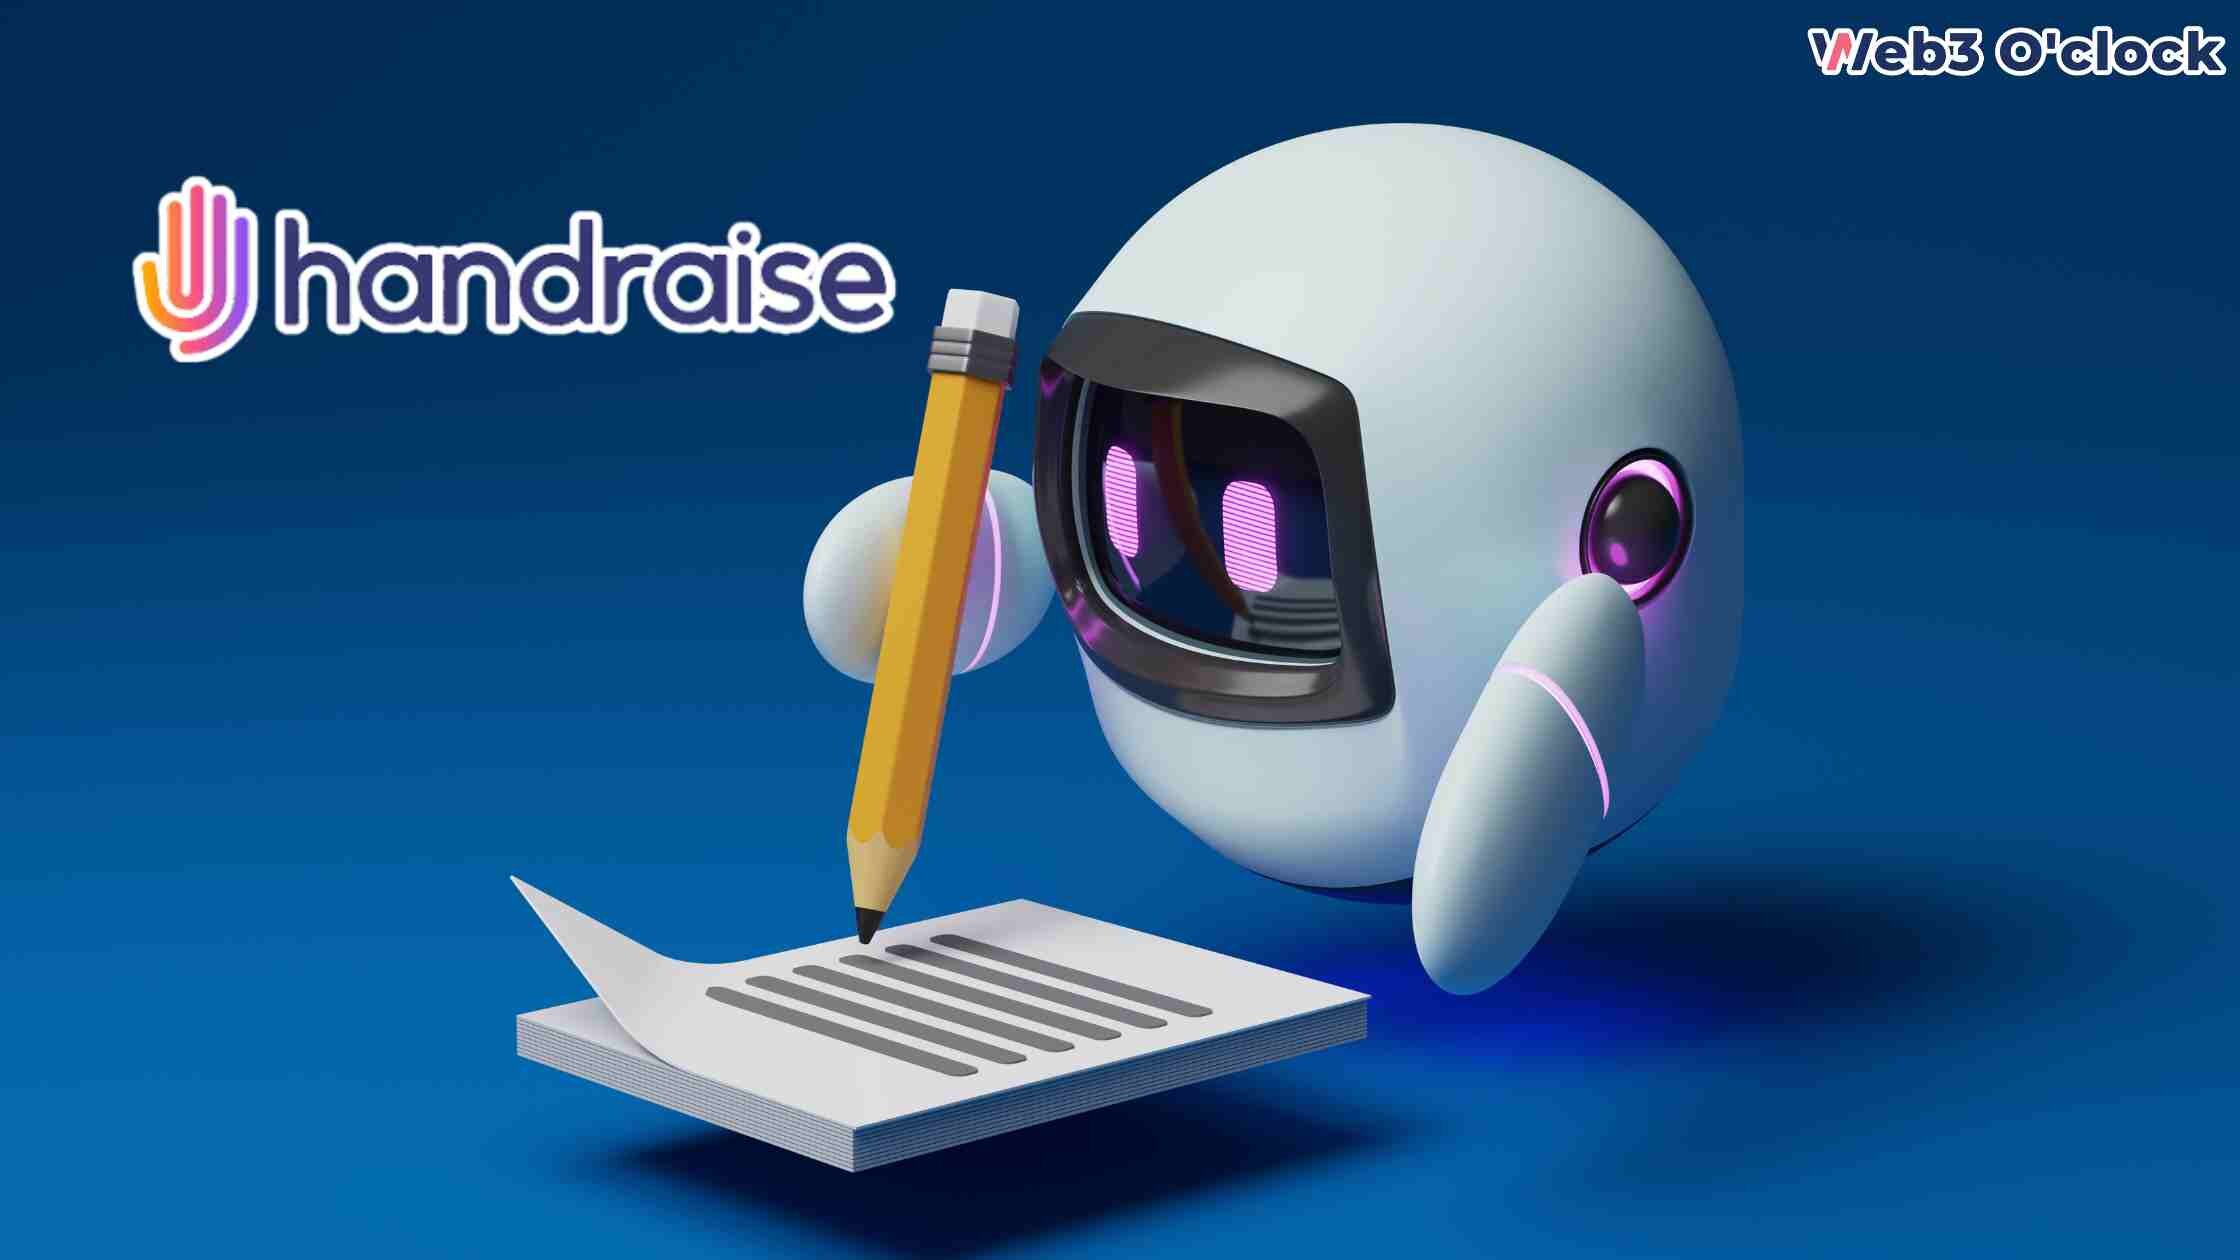 Handraise Raises $6.3 Million by Web3oclock